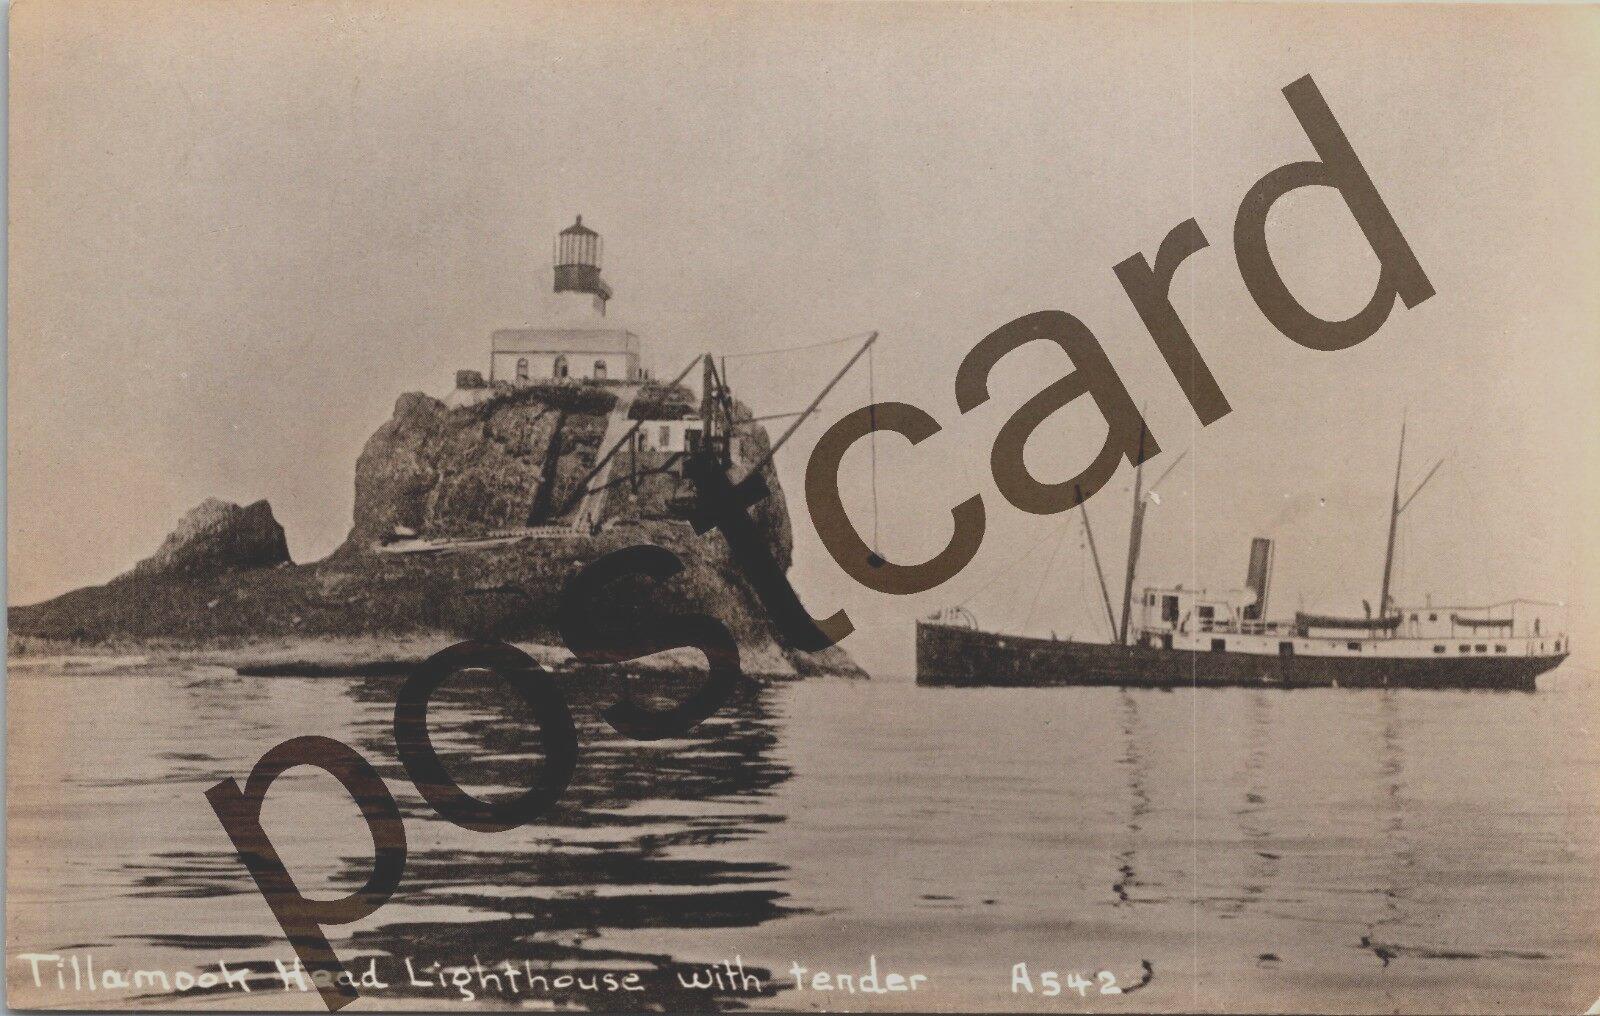 TILLAMOOK HEAD LIGHTHOUSE WITH TENDER, Oregon, crane boat, RPPC postcard jj285